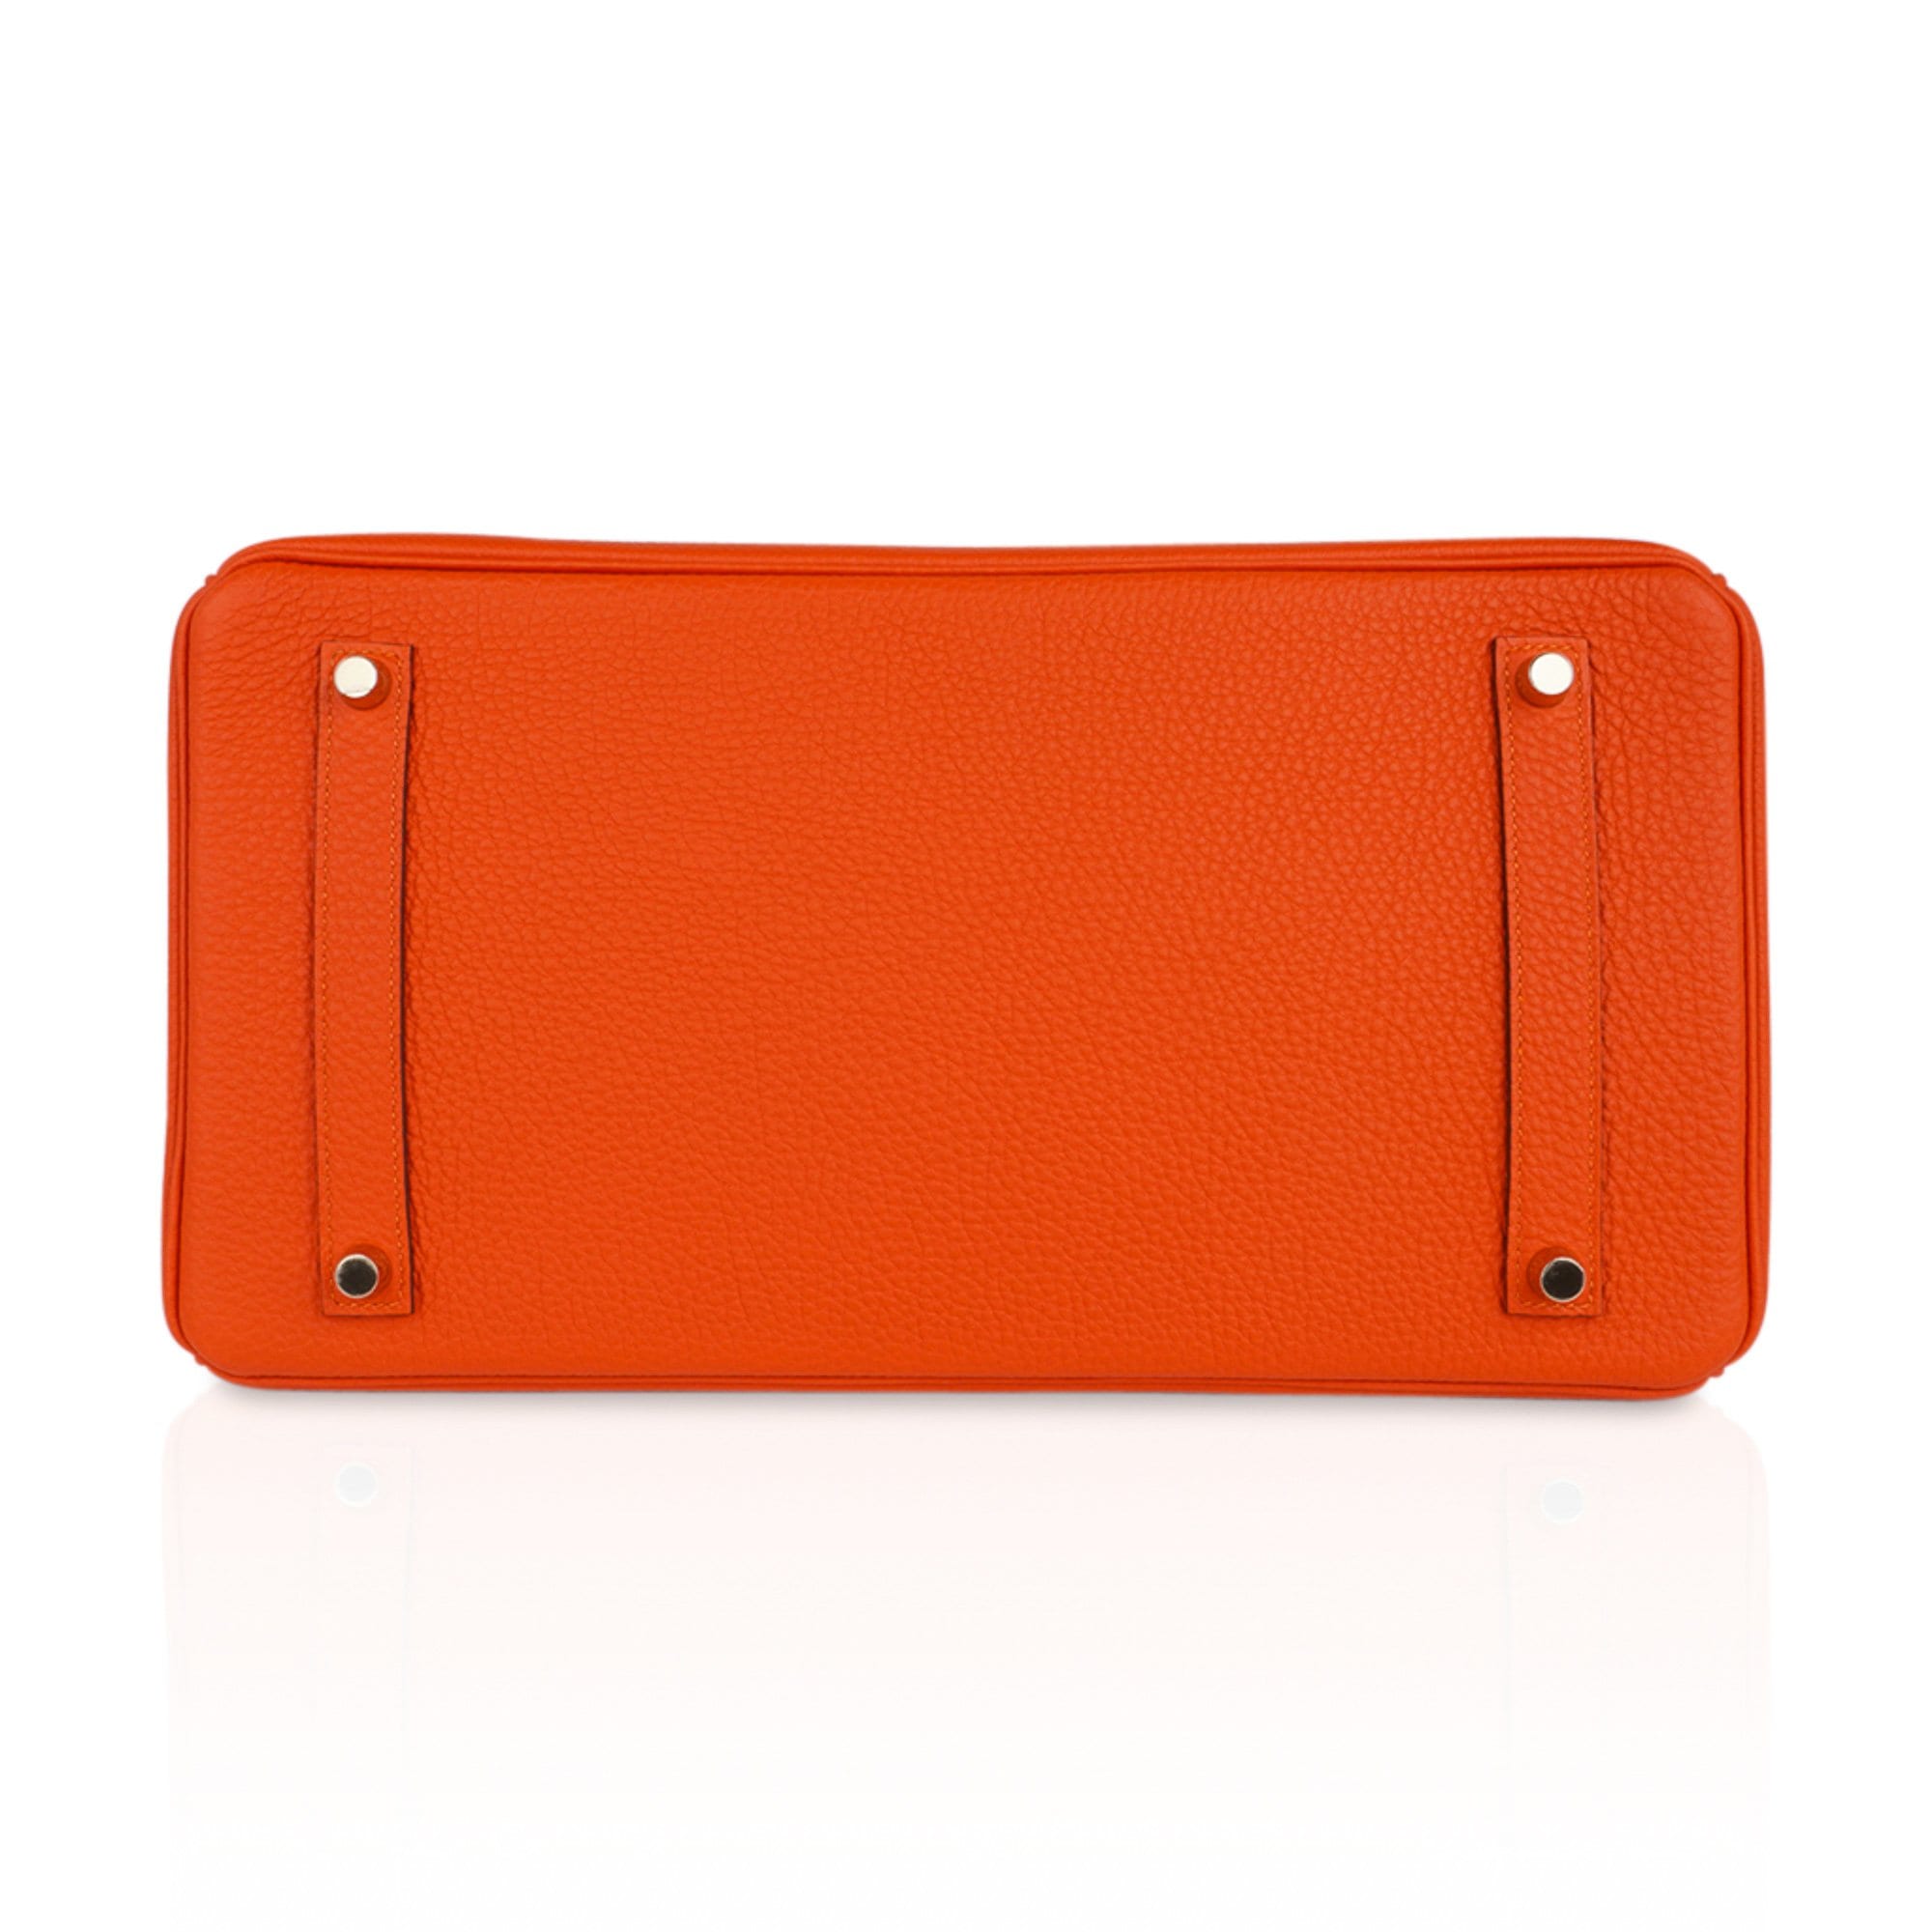 Hermes Birkin Bag Togo Orange 30cm Women's Handbag on Sale